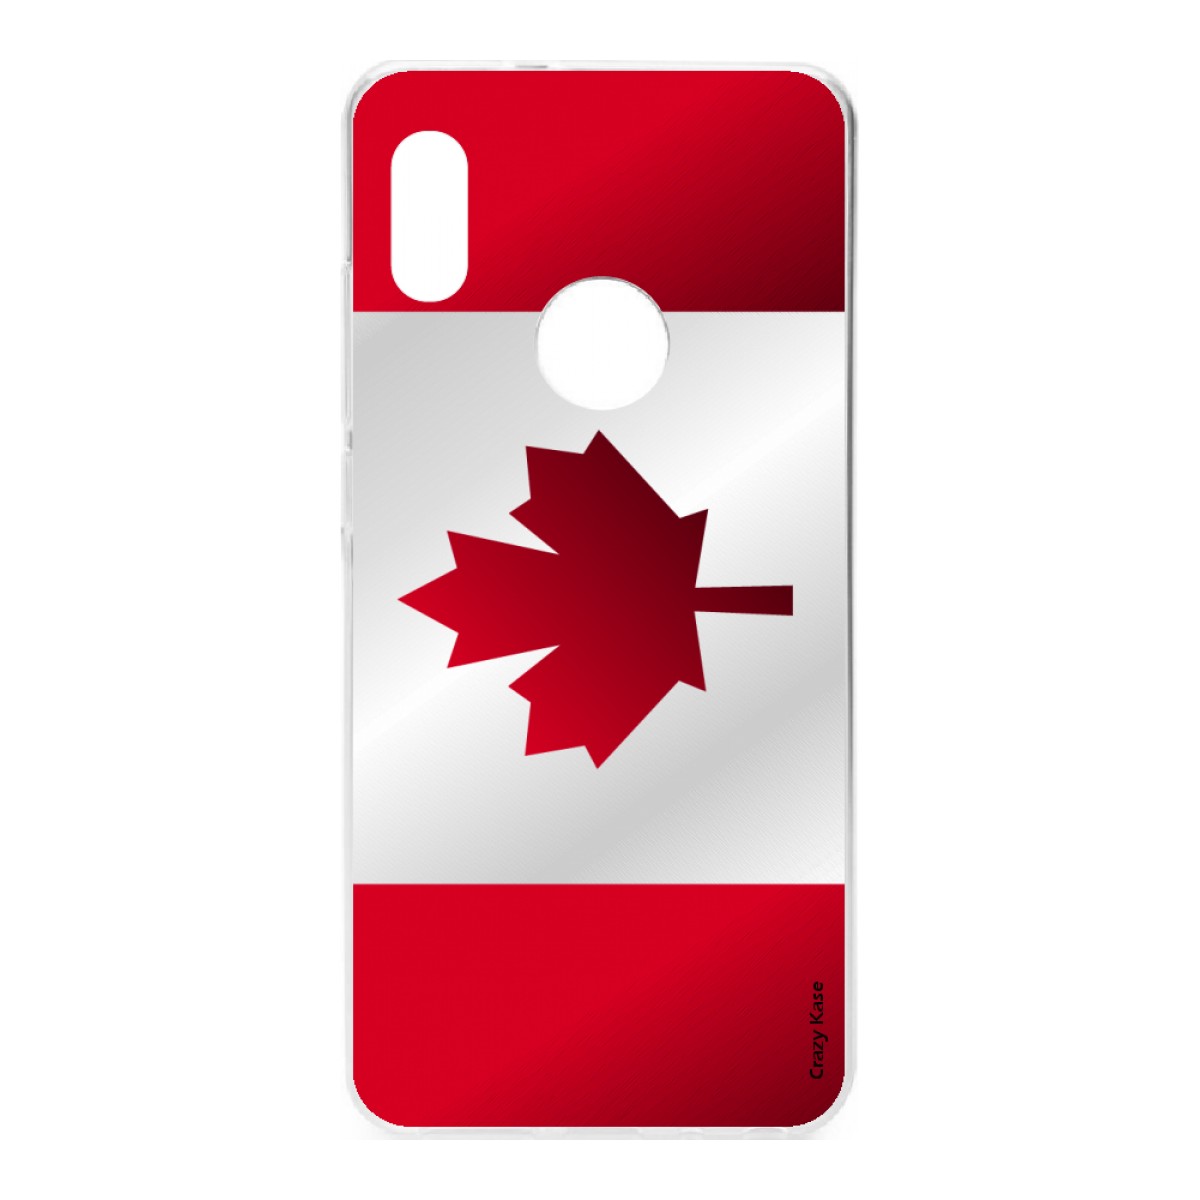 Coque pour Xiaomi Redmi Note 7 en silicone souple, Drapeau du Canada